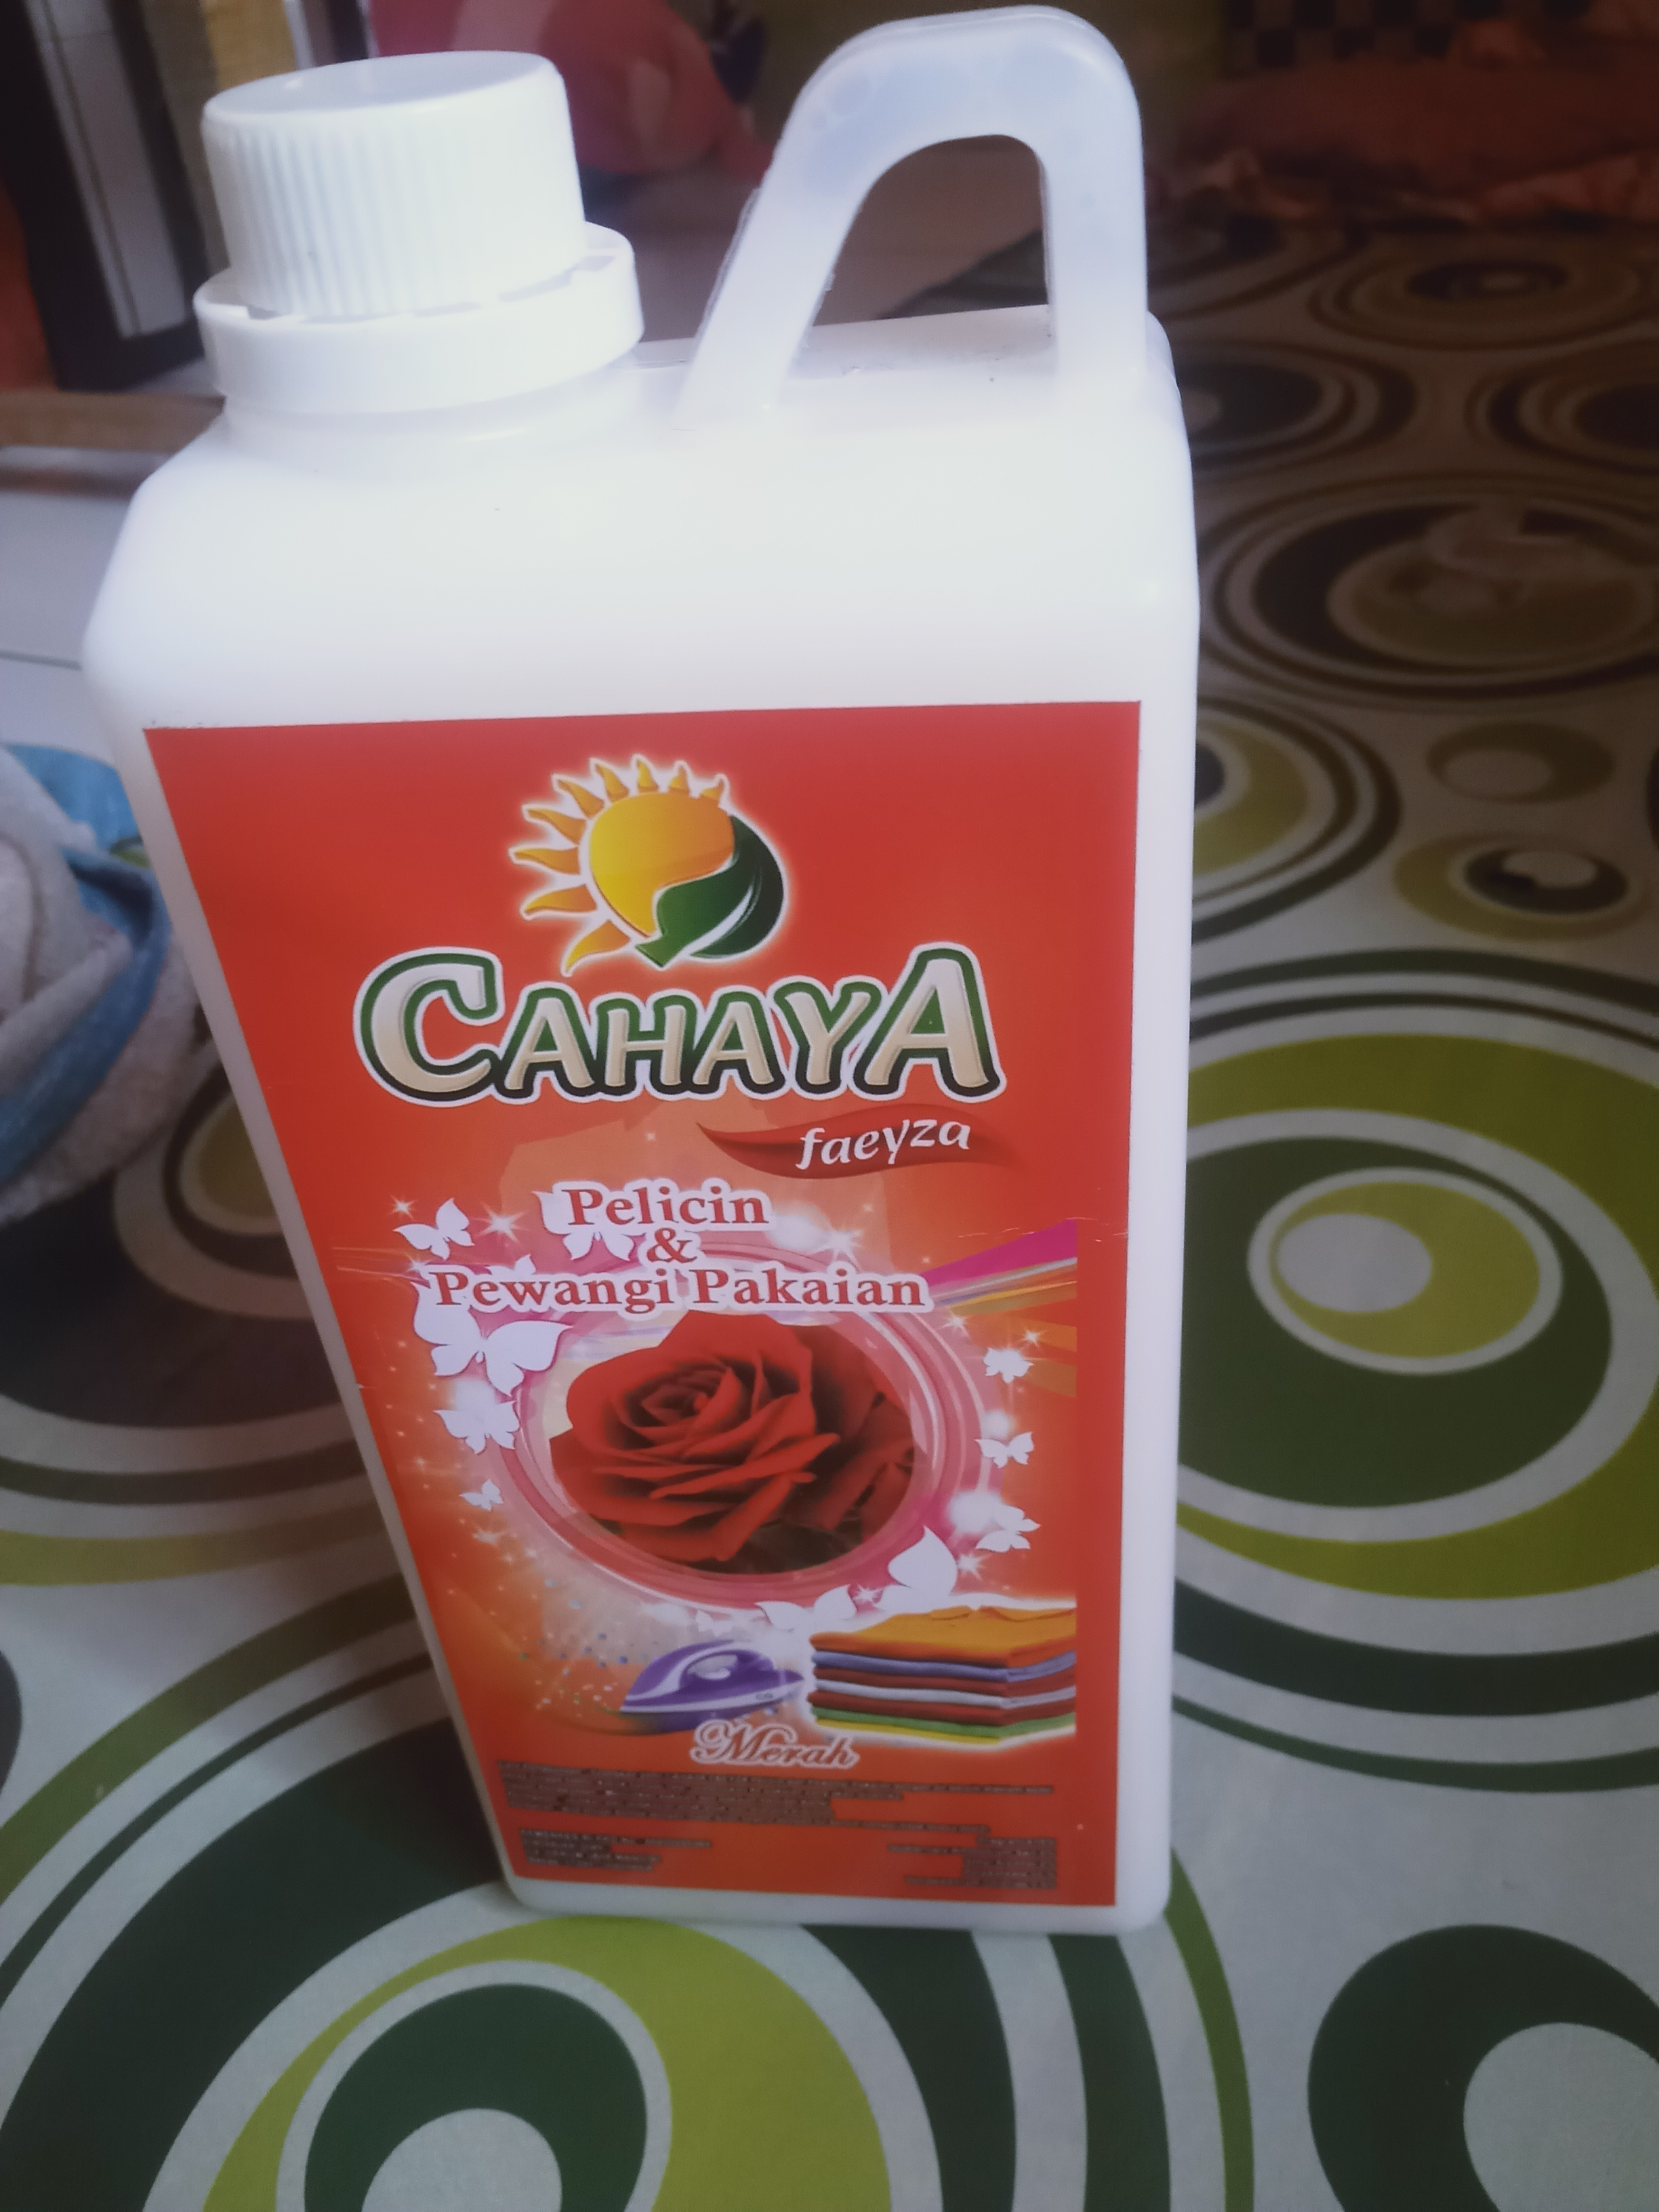 | tahan Indonesia lama,kental dengan pewangi CAHAYA Lazada (sakura)wangi beda 100%original lainya laundry yang